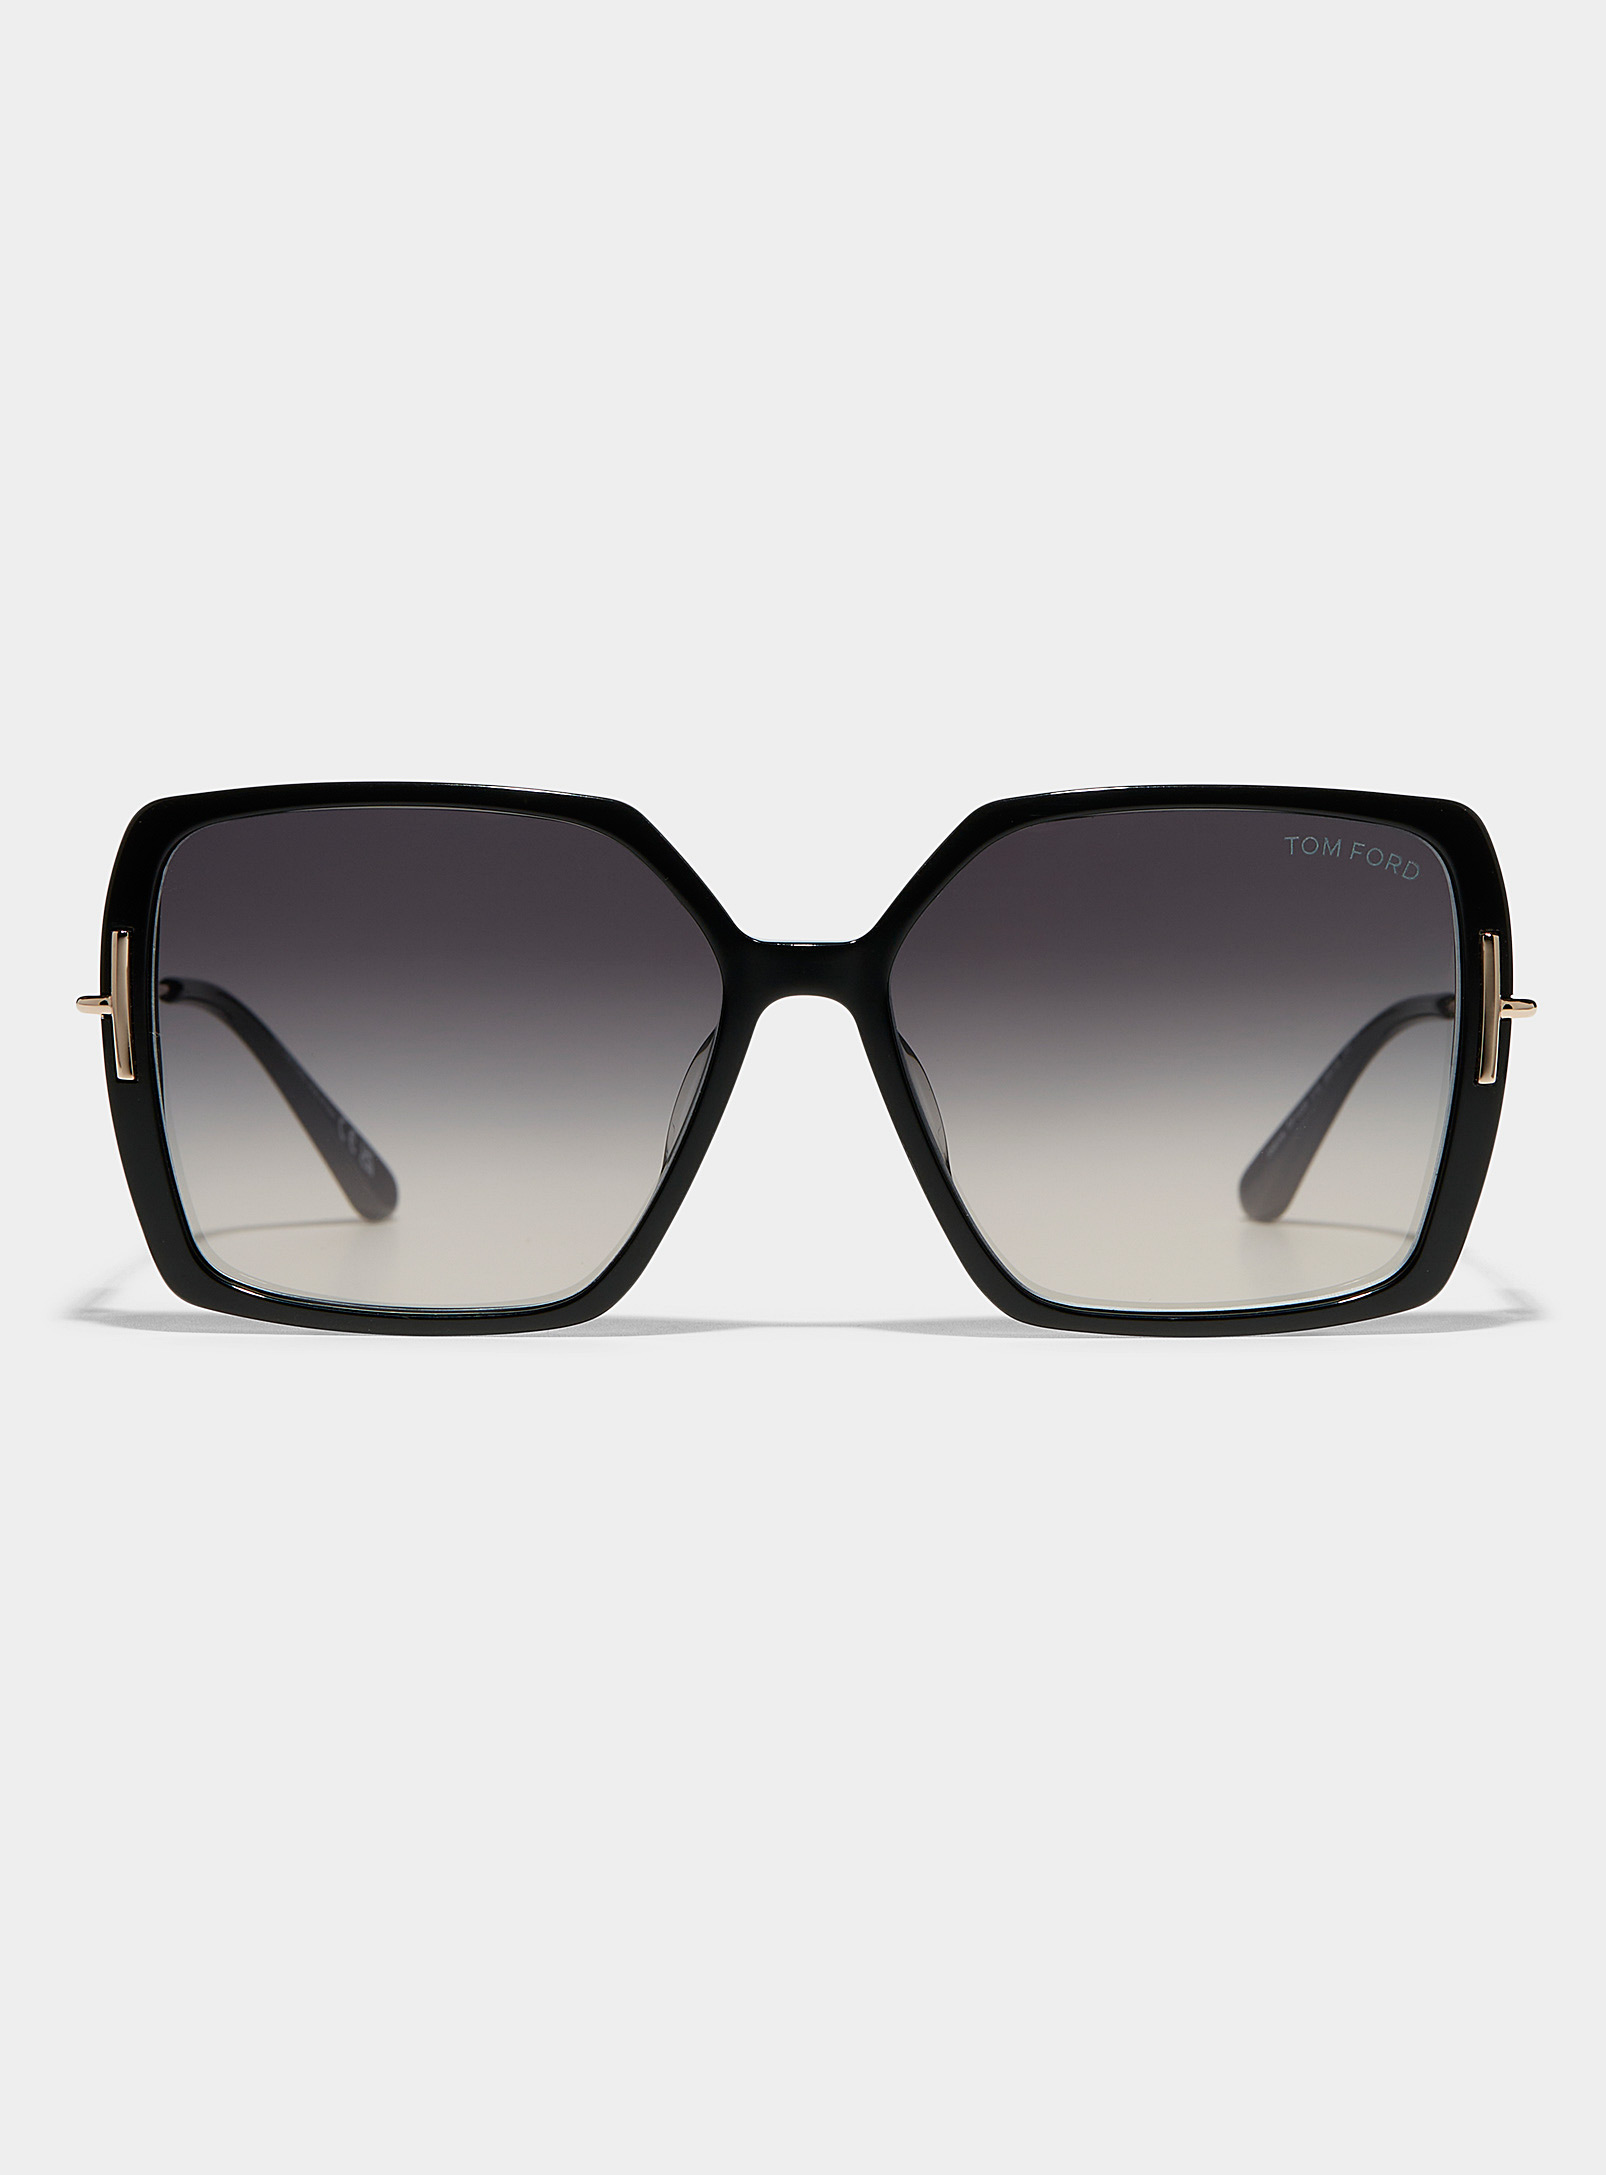 Tom Ford Joanna Square Sunglasses In Black